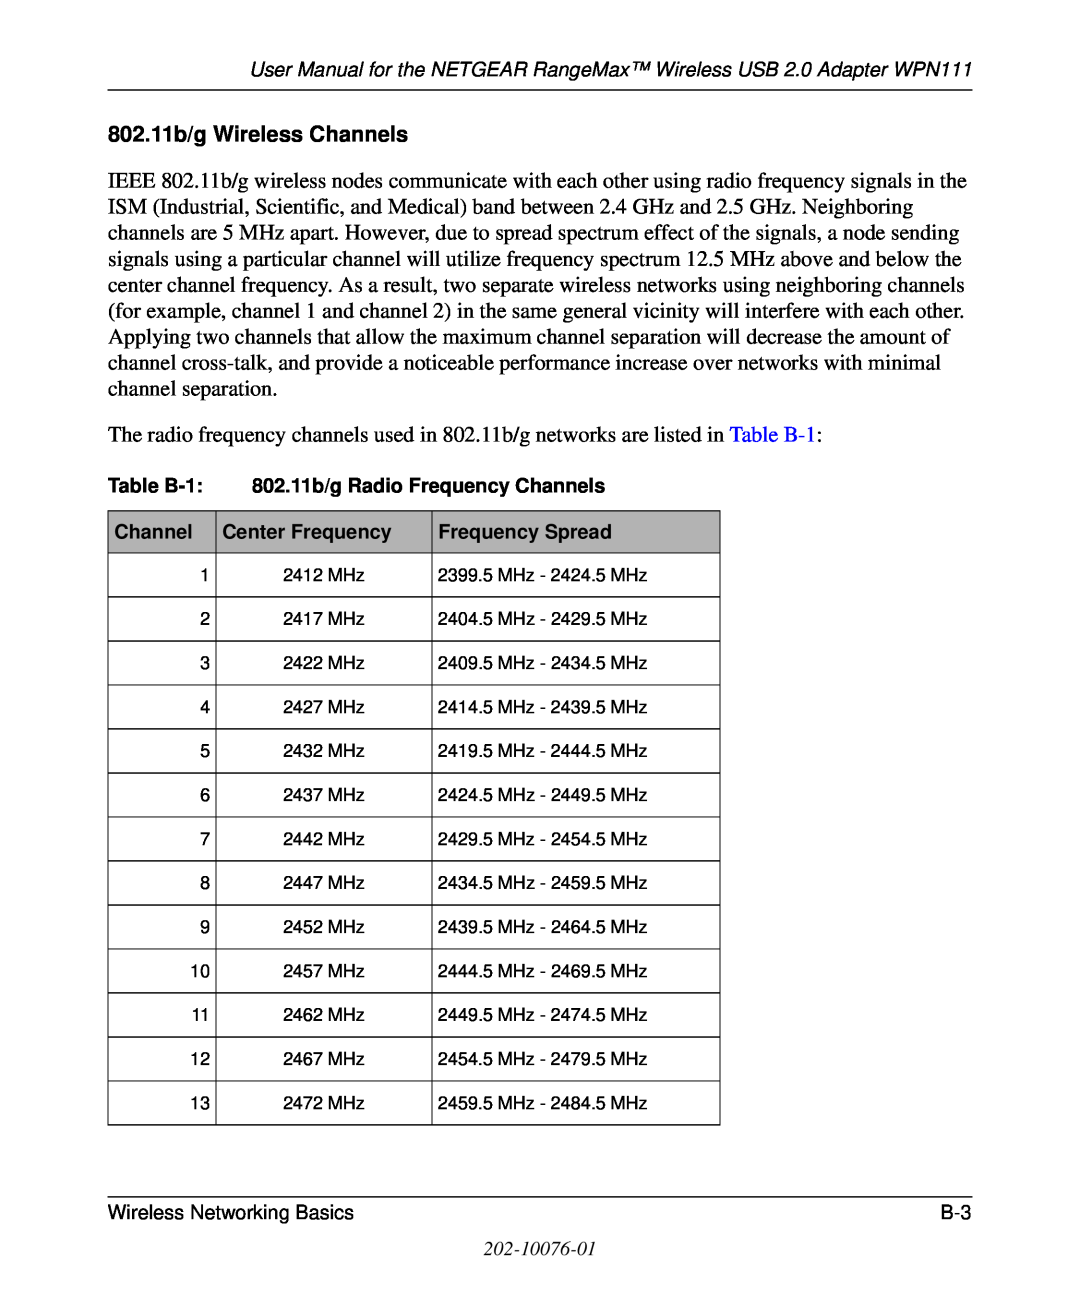 NETGEAR WPN111 user manual 802.11b/g Wireless Channels, Table B-1, 802.11b/g Radio Frequency Channels, Center Frequency 